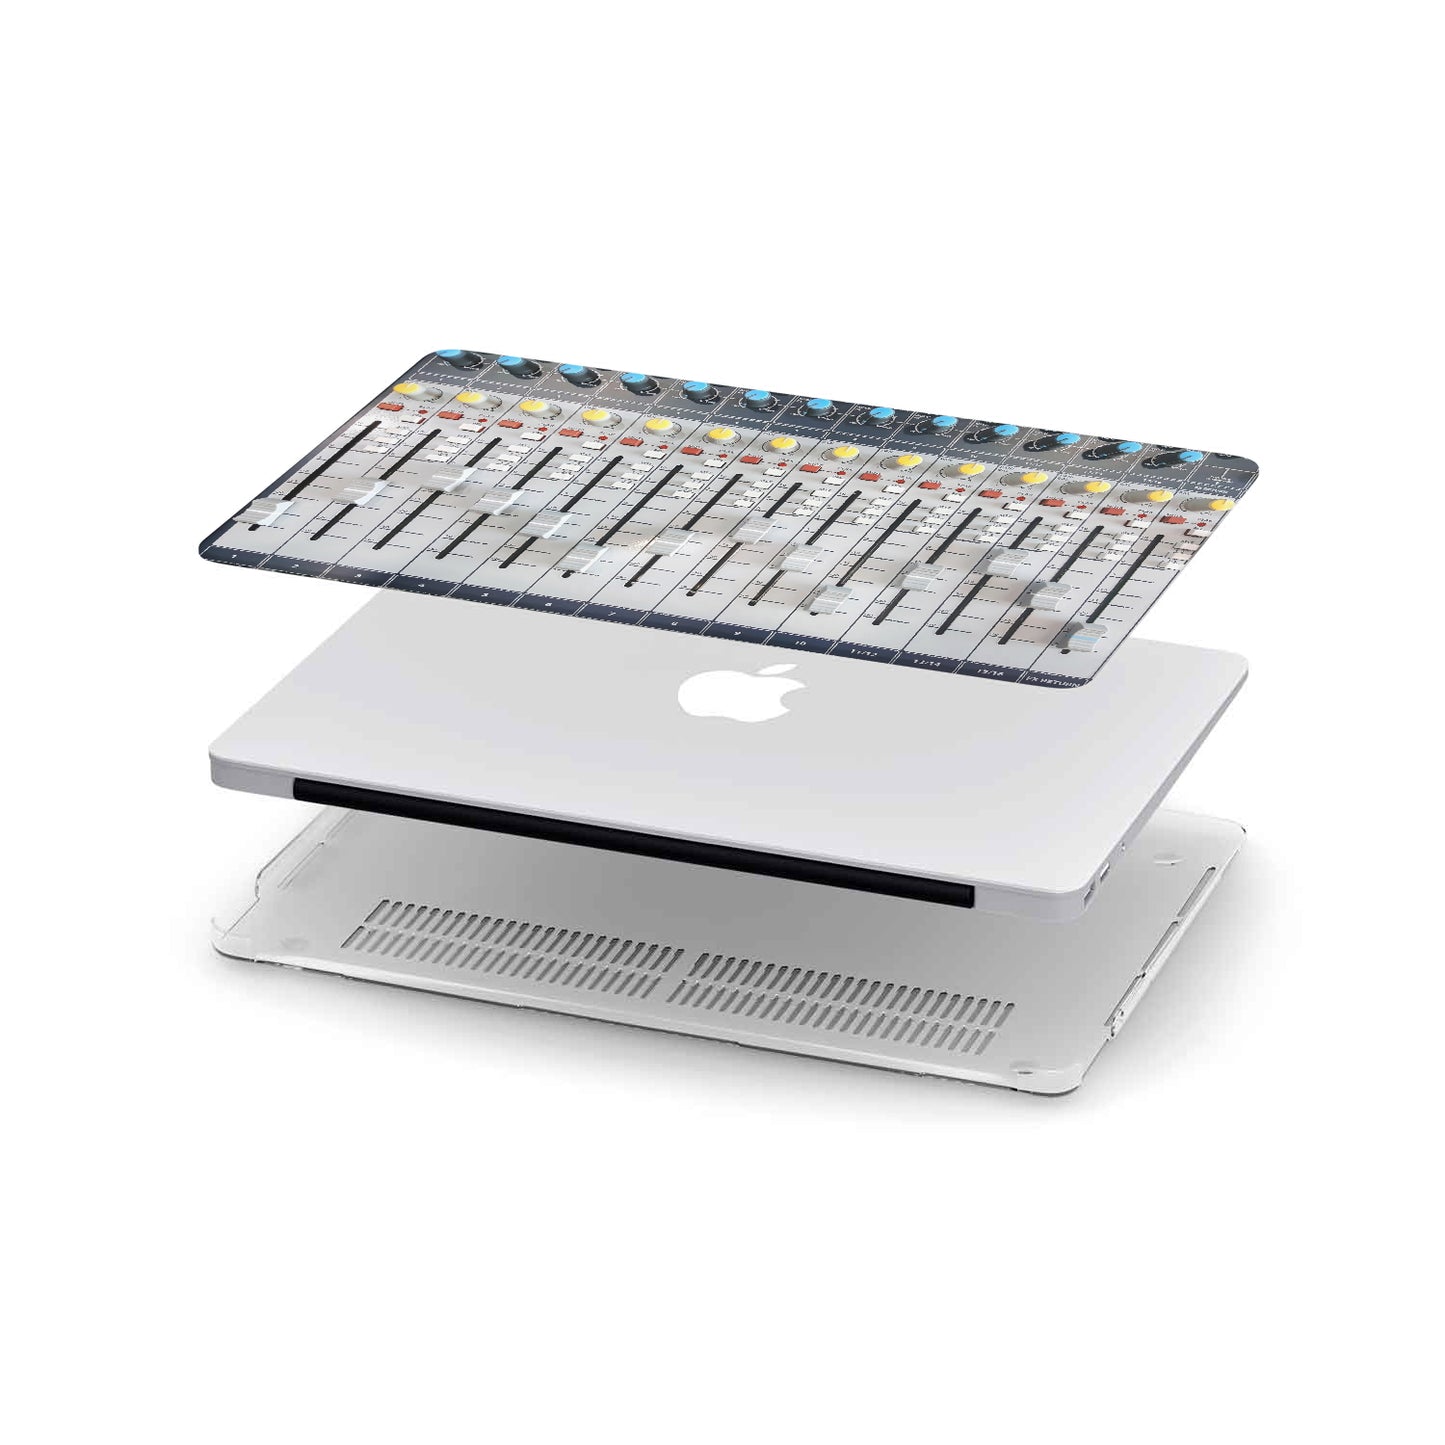 Macbook Hard Shell Case - DJ Audio Mixer